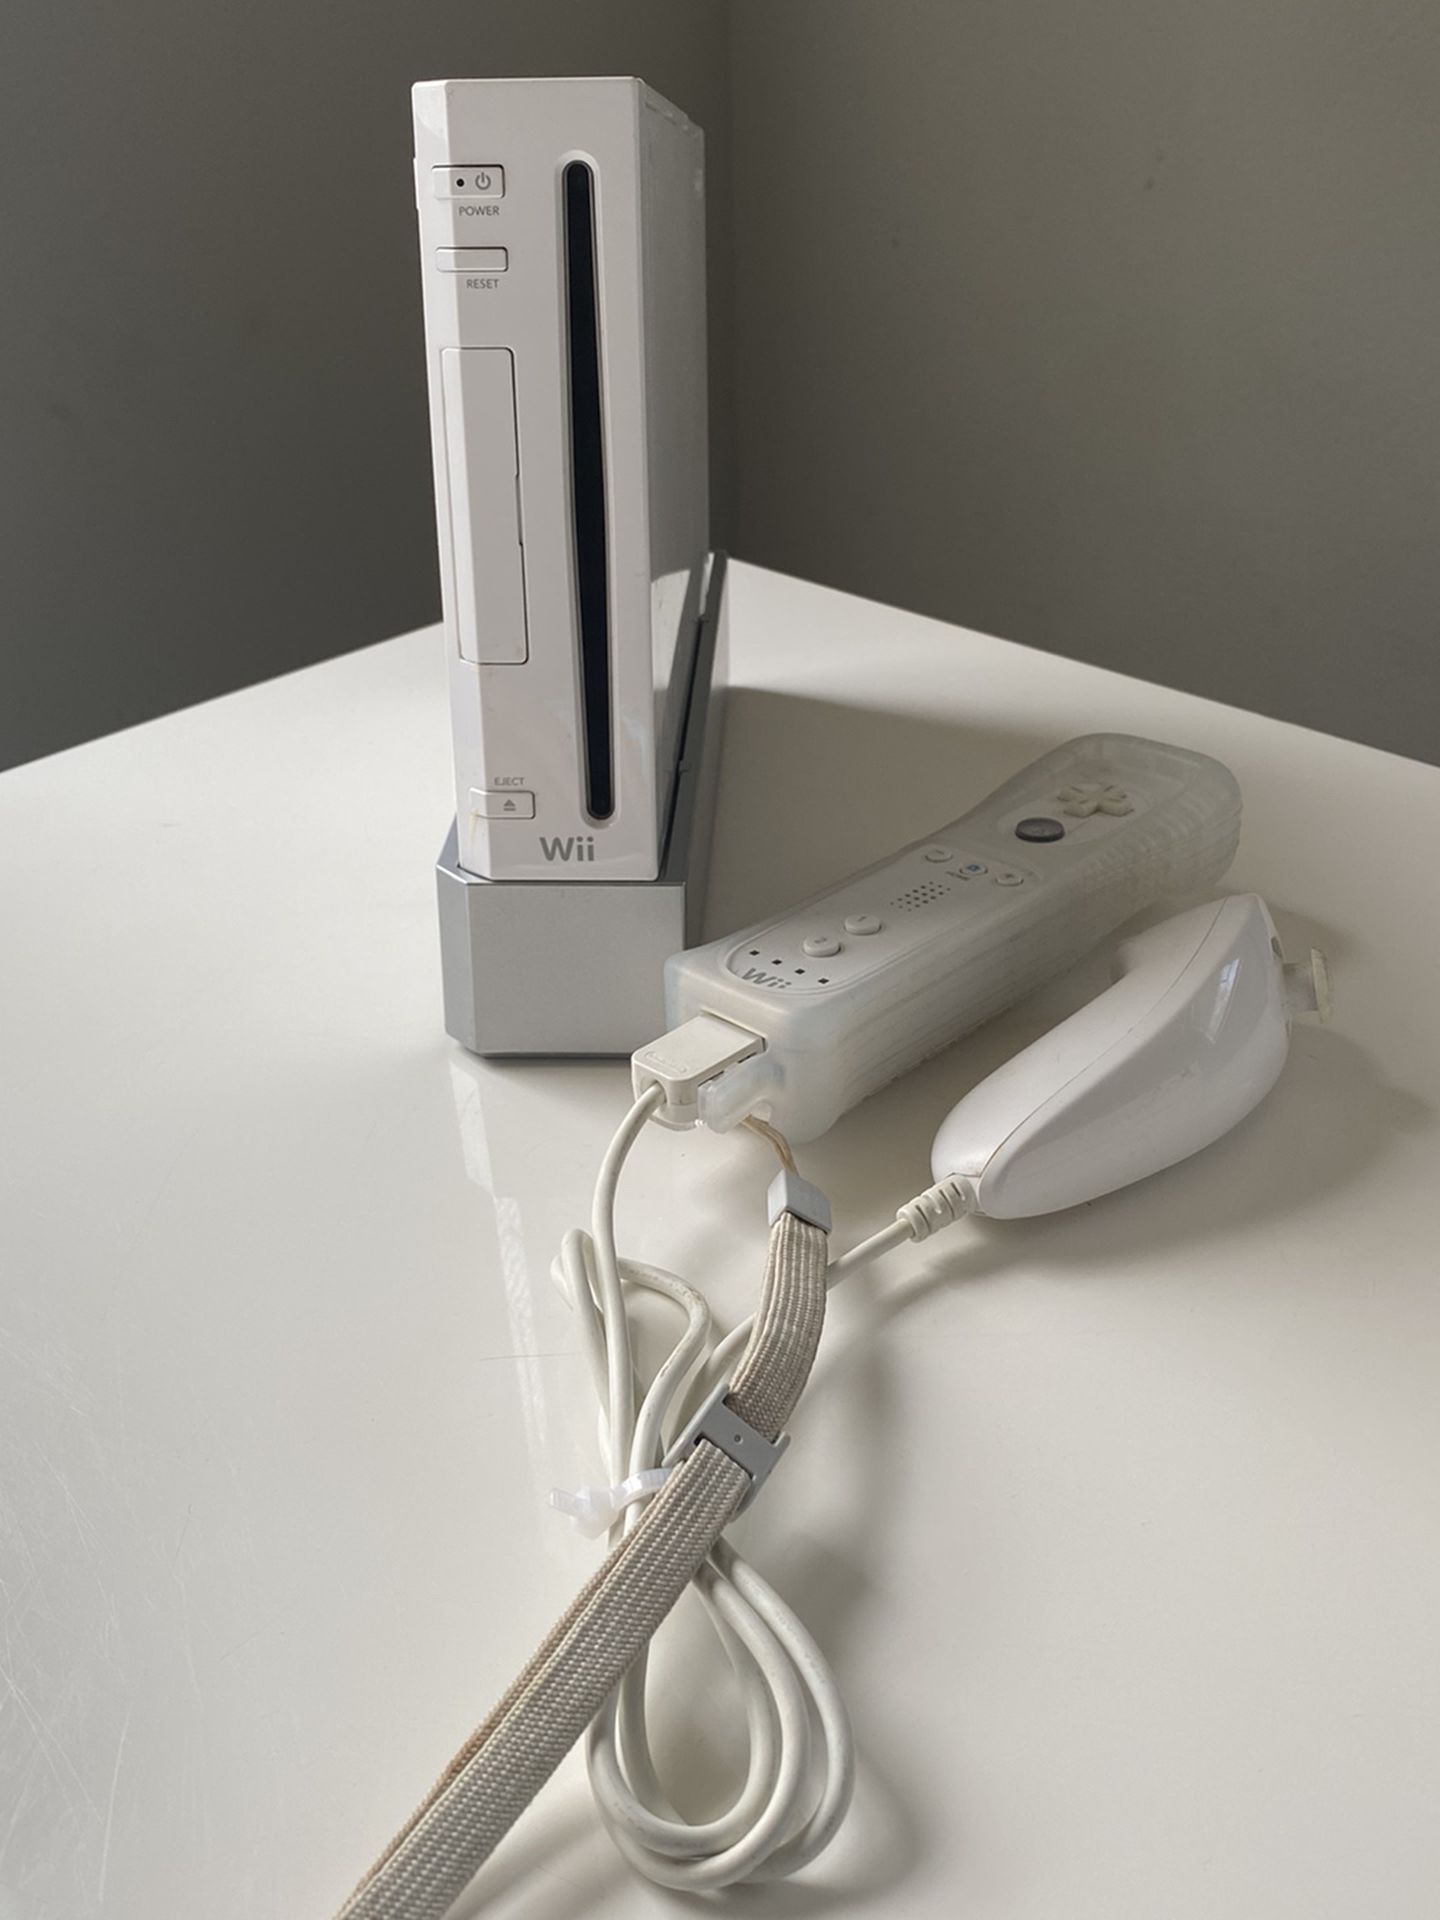 Nintendo Wii || Modded || +10 Games